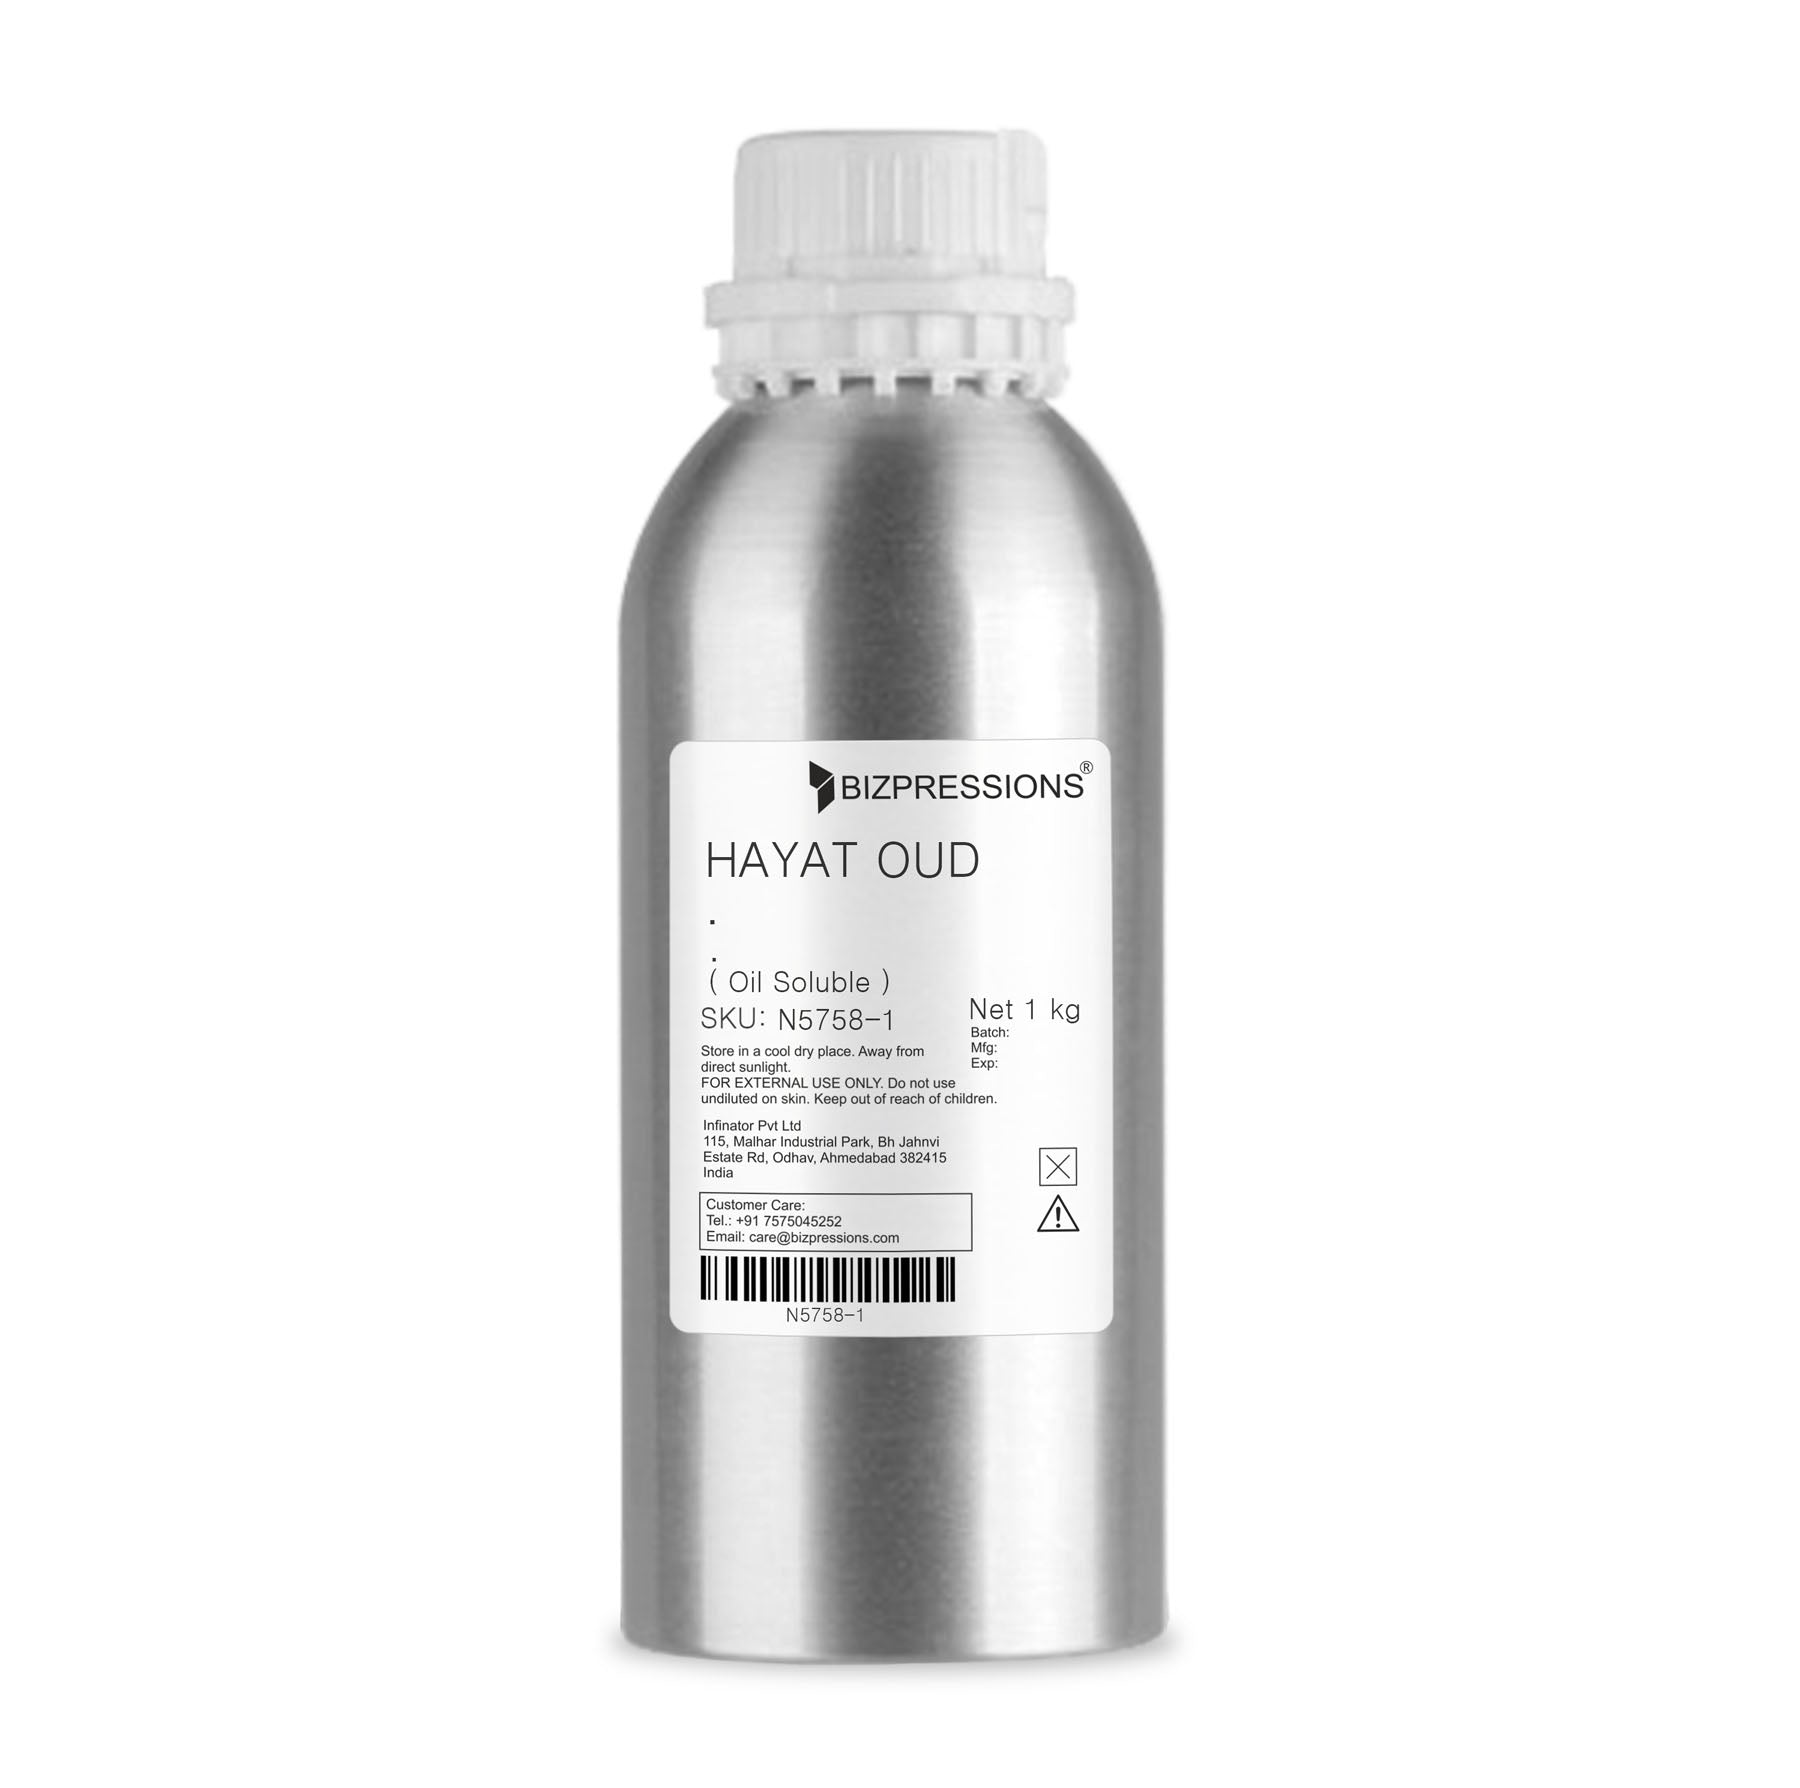 HAYAT OUD - Fragrance ( Oil Soluble ) - 1 kg